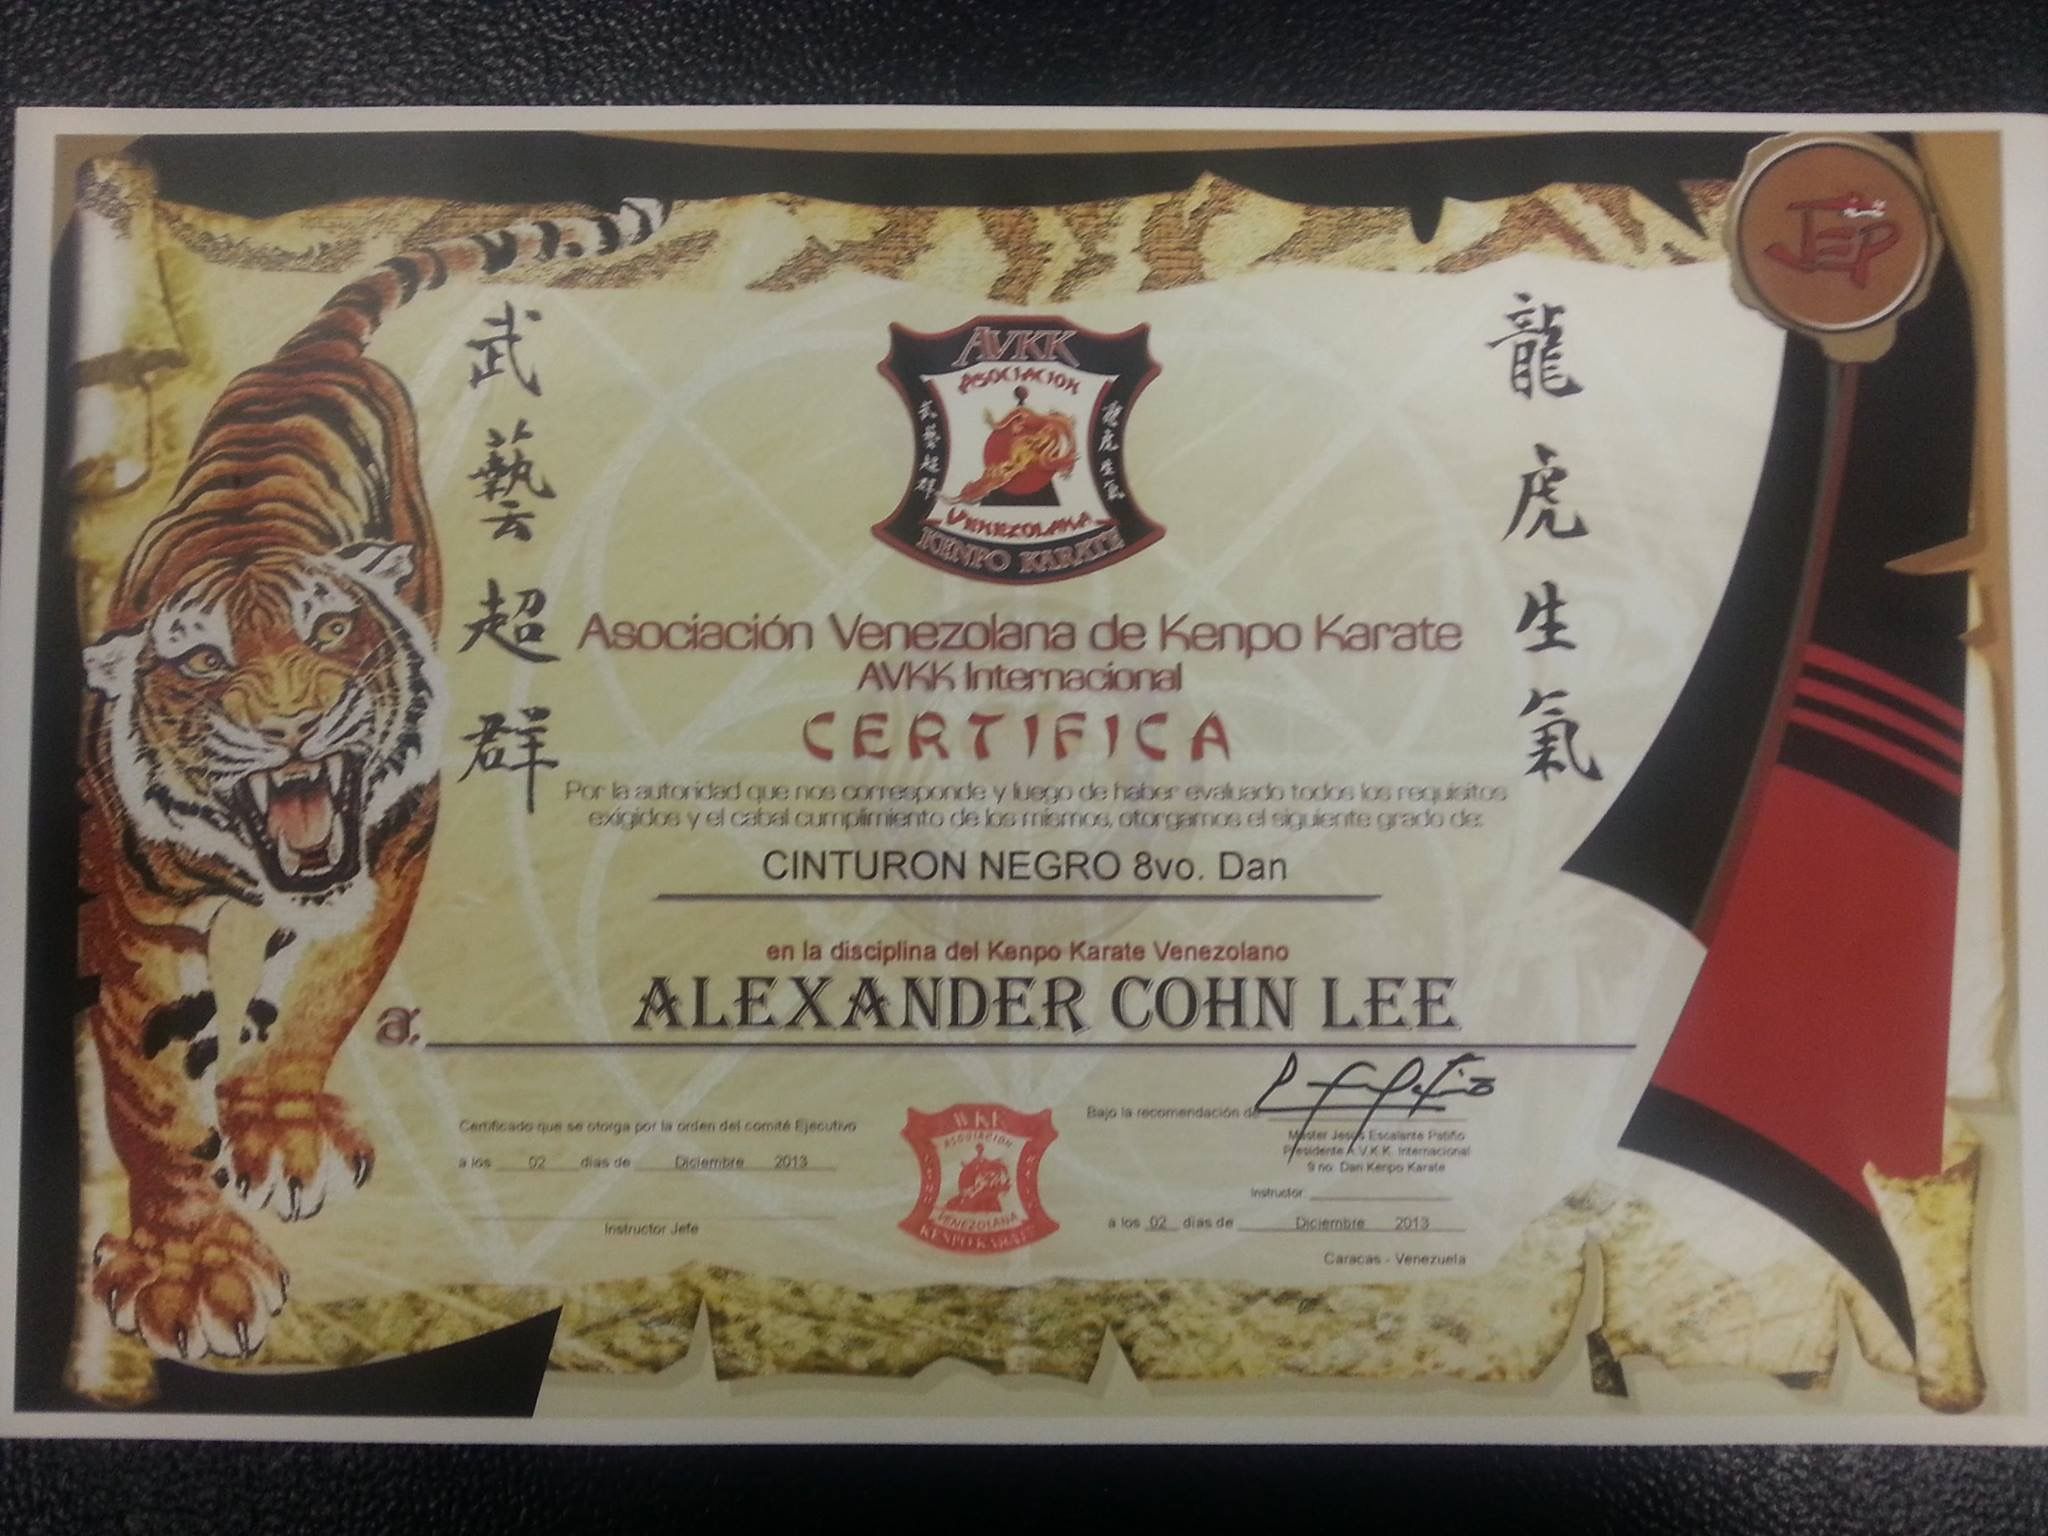 Pin by Douglas E Hamilton on Martial Art Certificate around the world